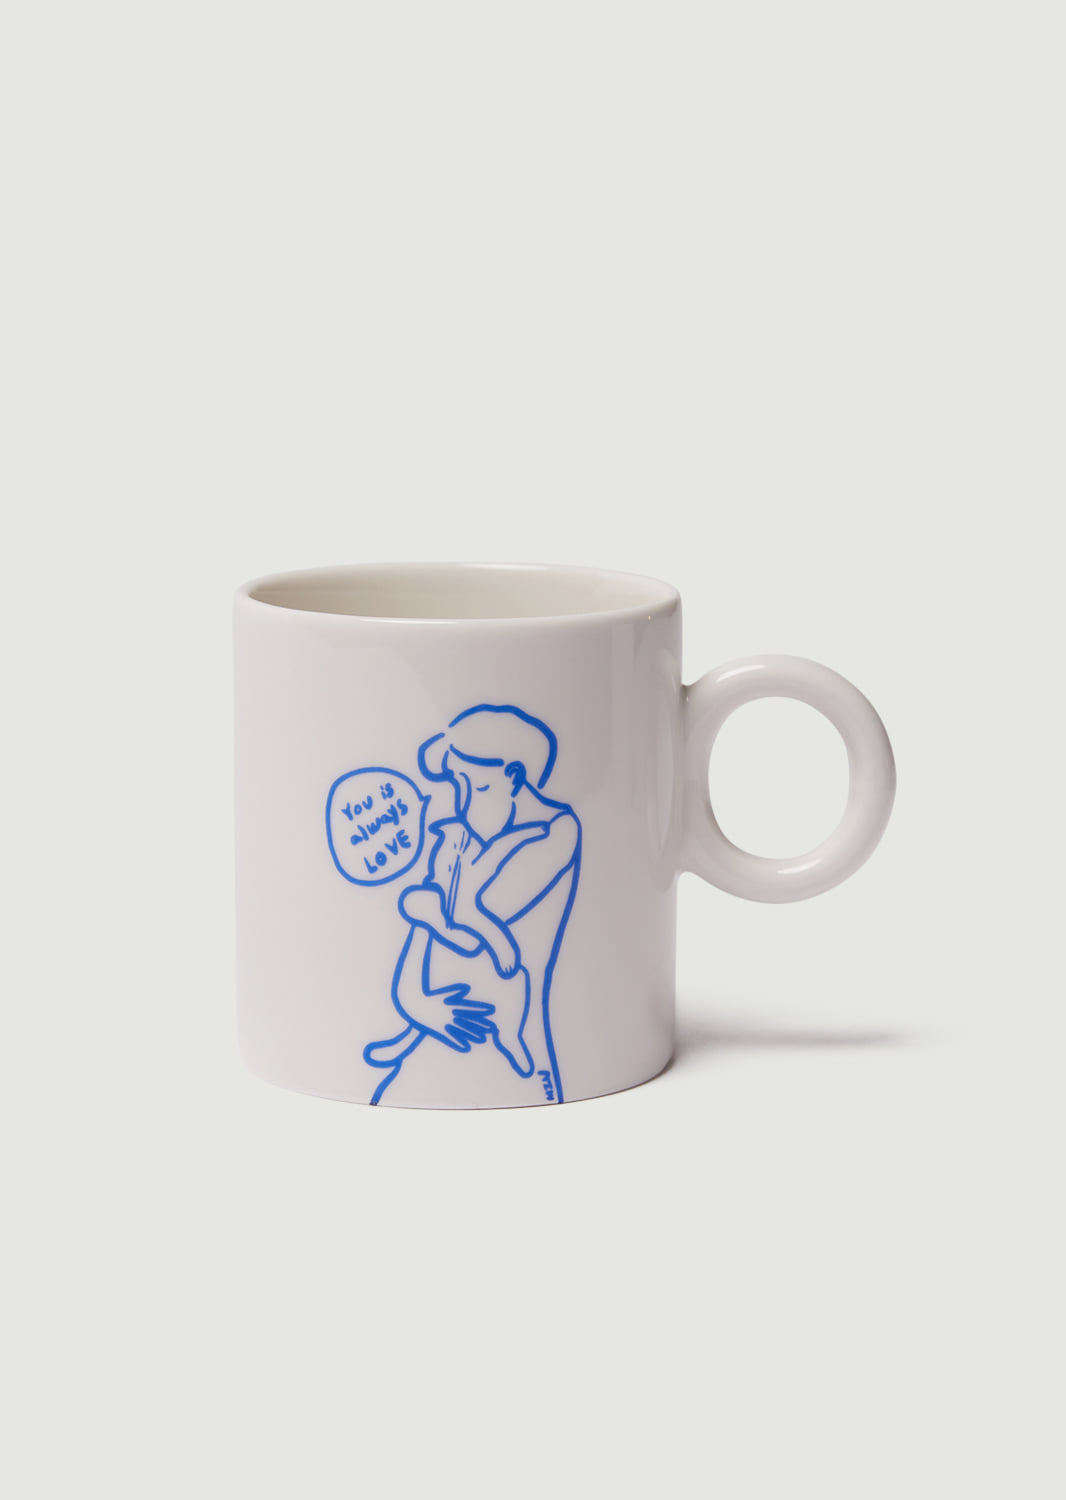 “You is always LOVE” ceramic mug cup